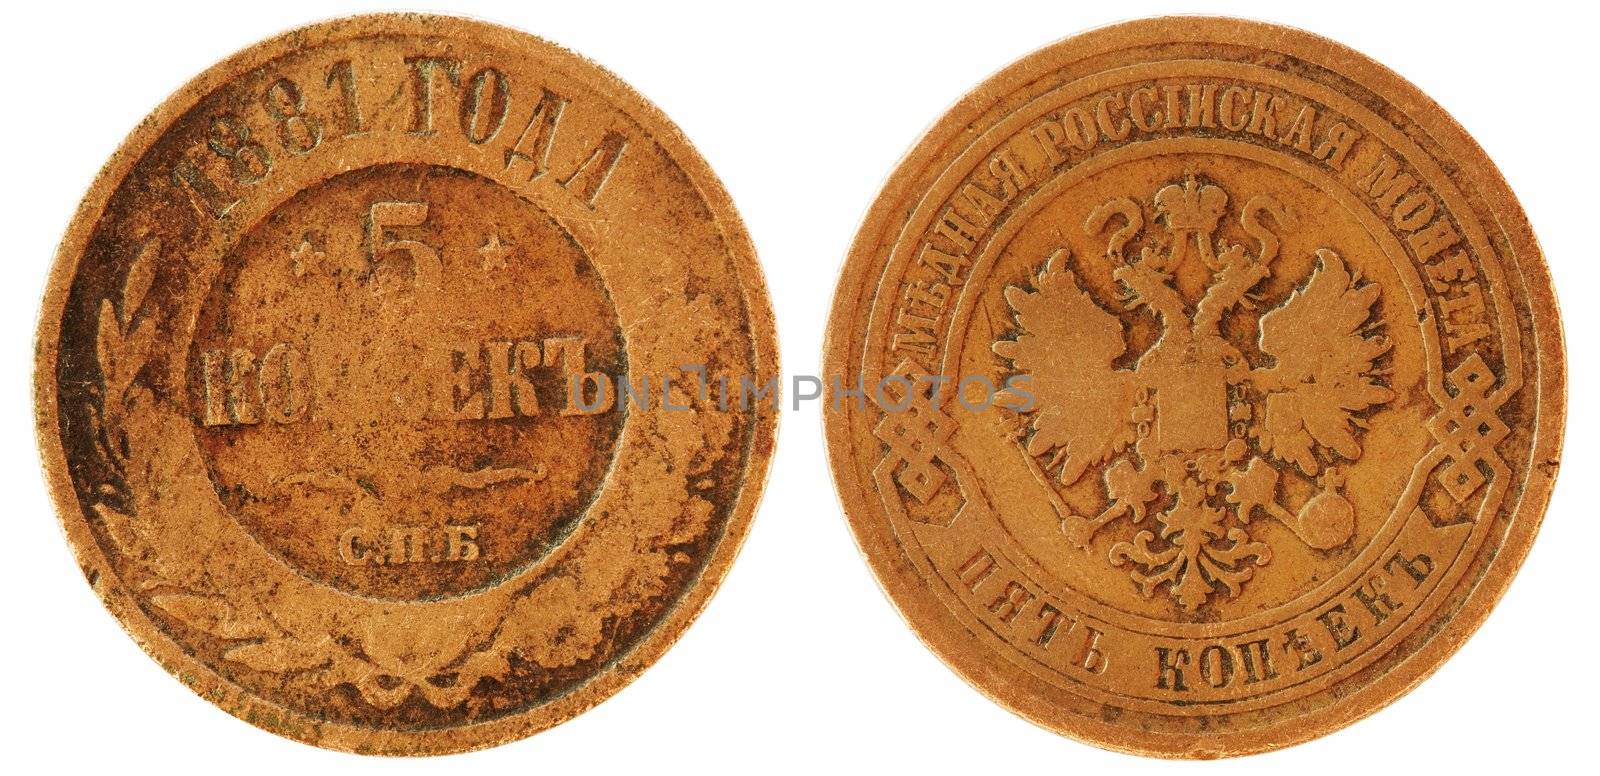 Russian coin - 5 copecks by pzaxe